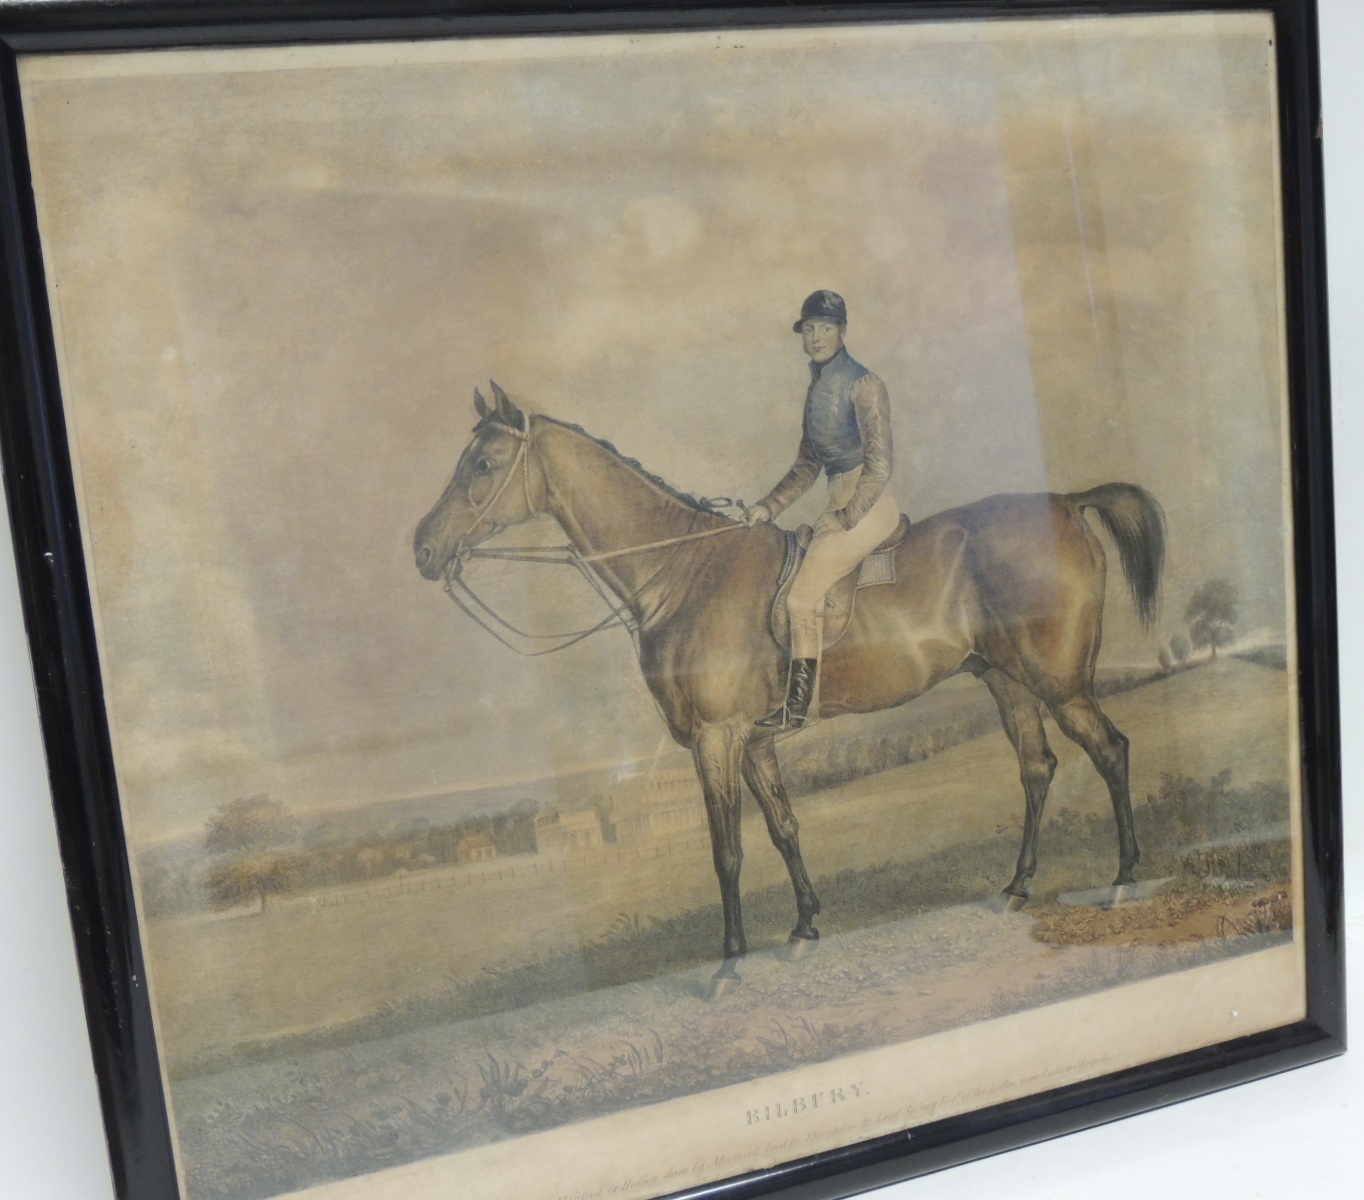 A 19th Century print of racehorse "Bilbery" 49cms x 54cms